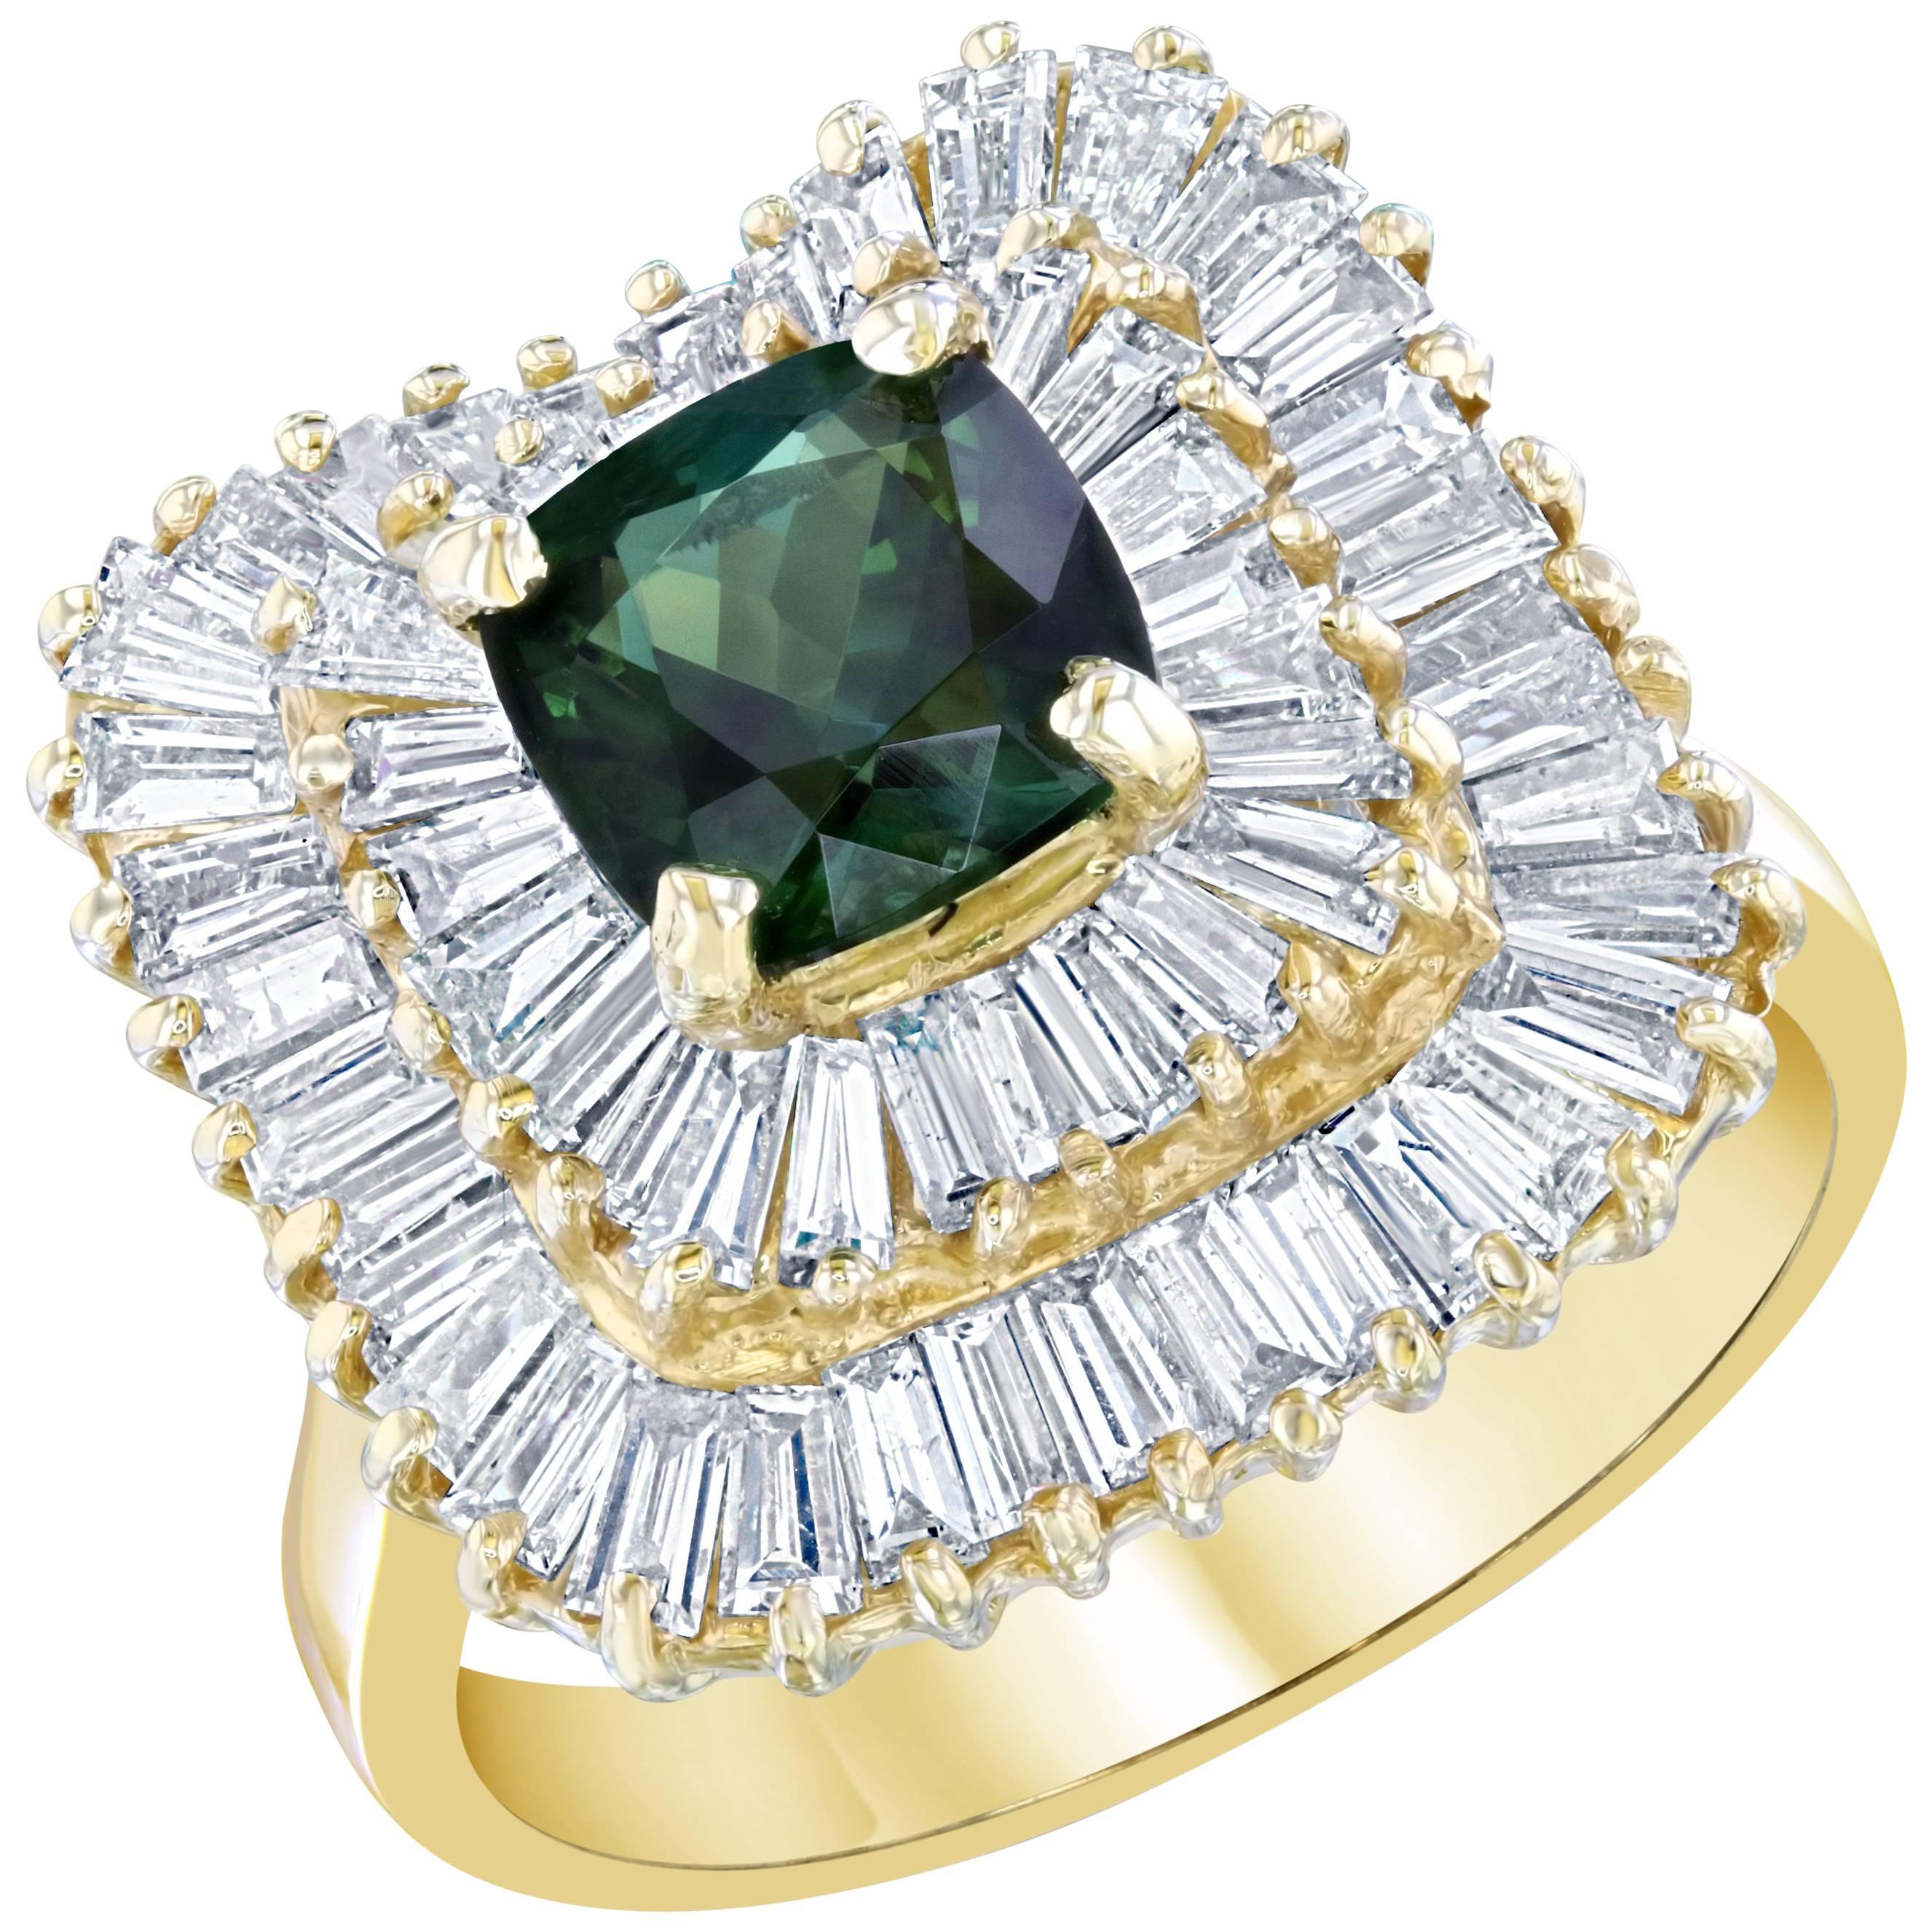 Green Tourmaline and Diamond Ring 14K Yellow Gold